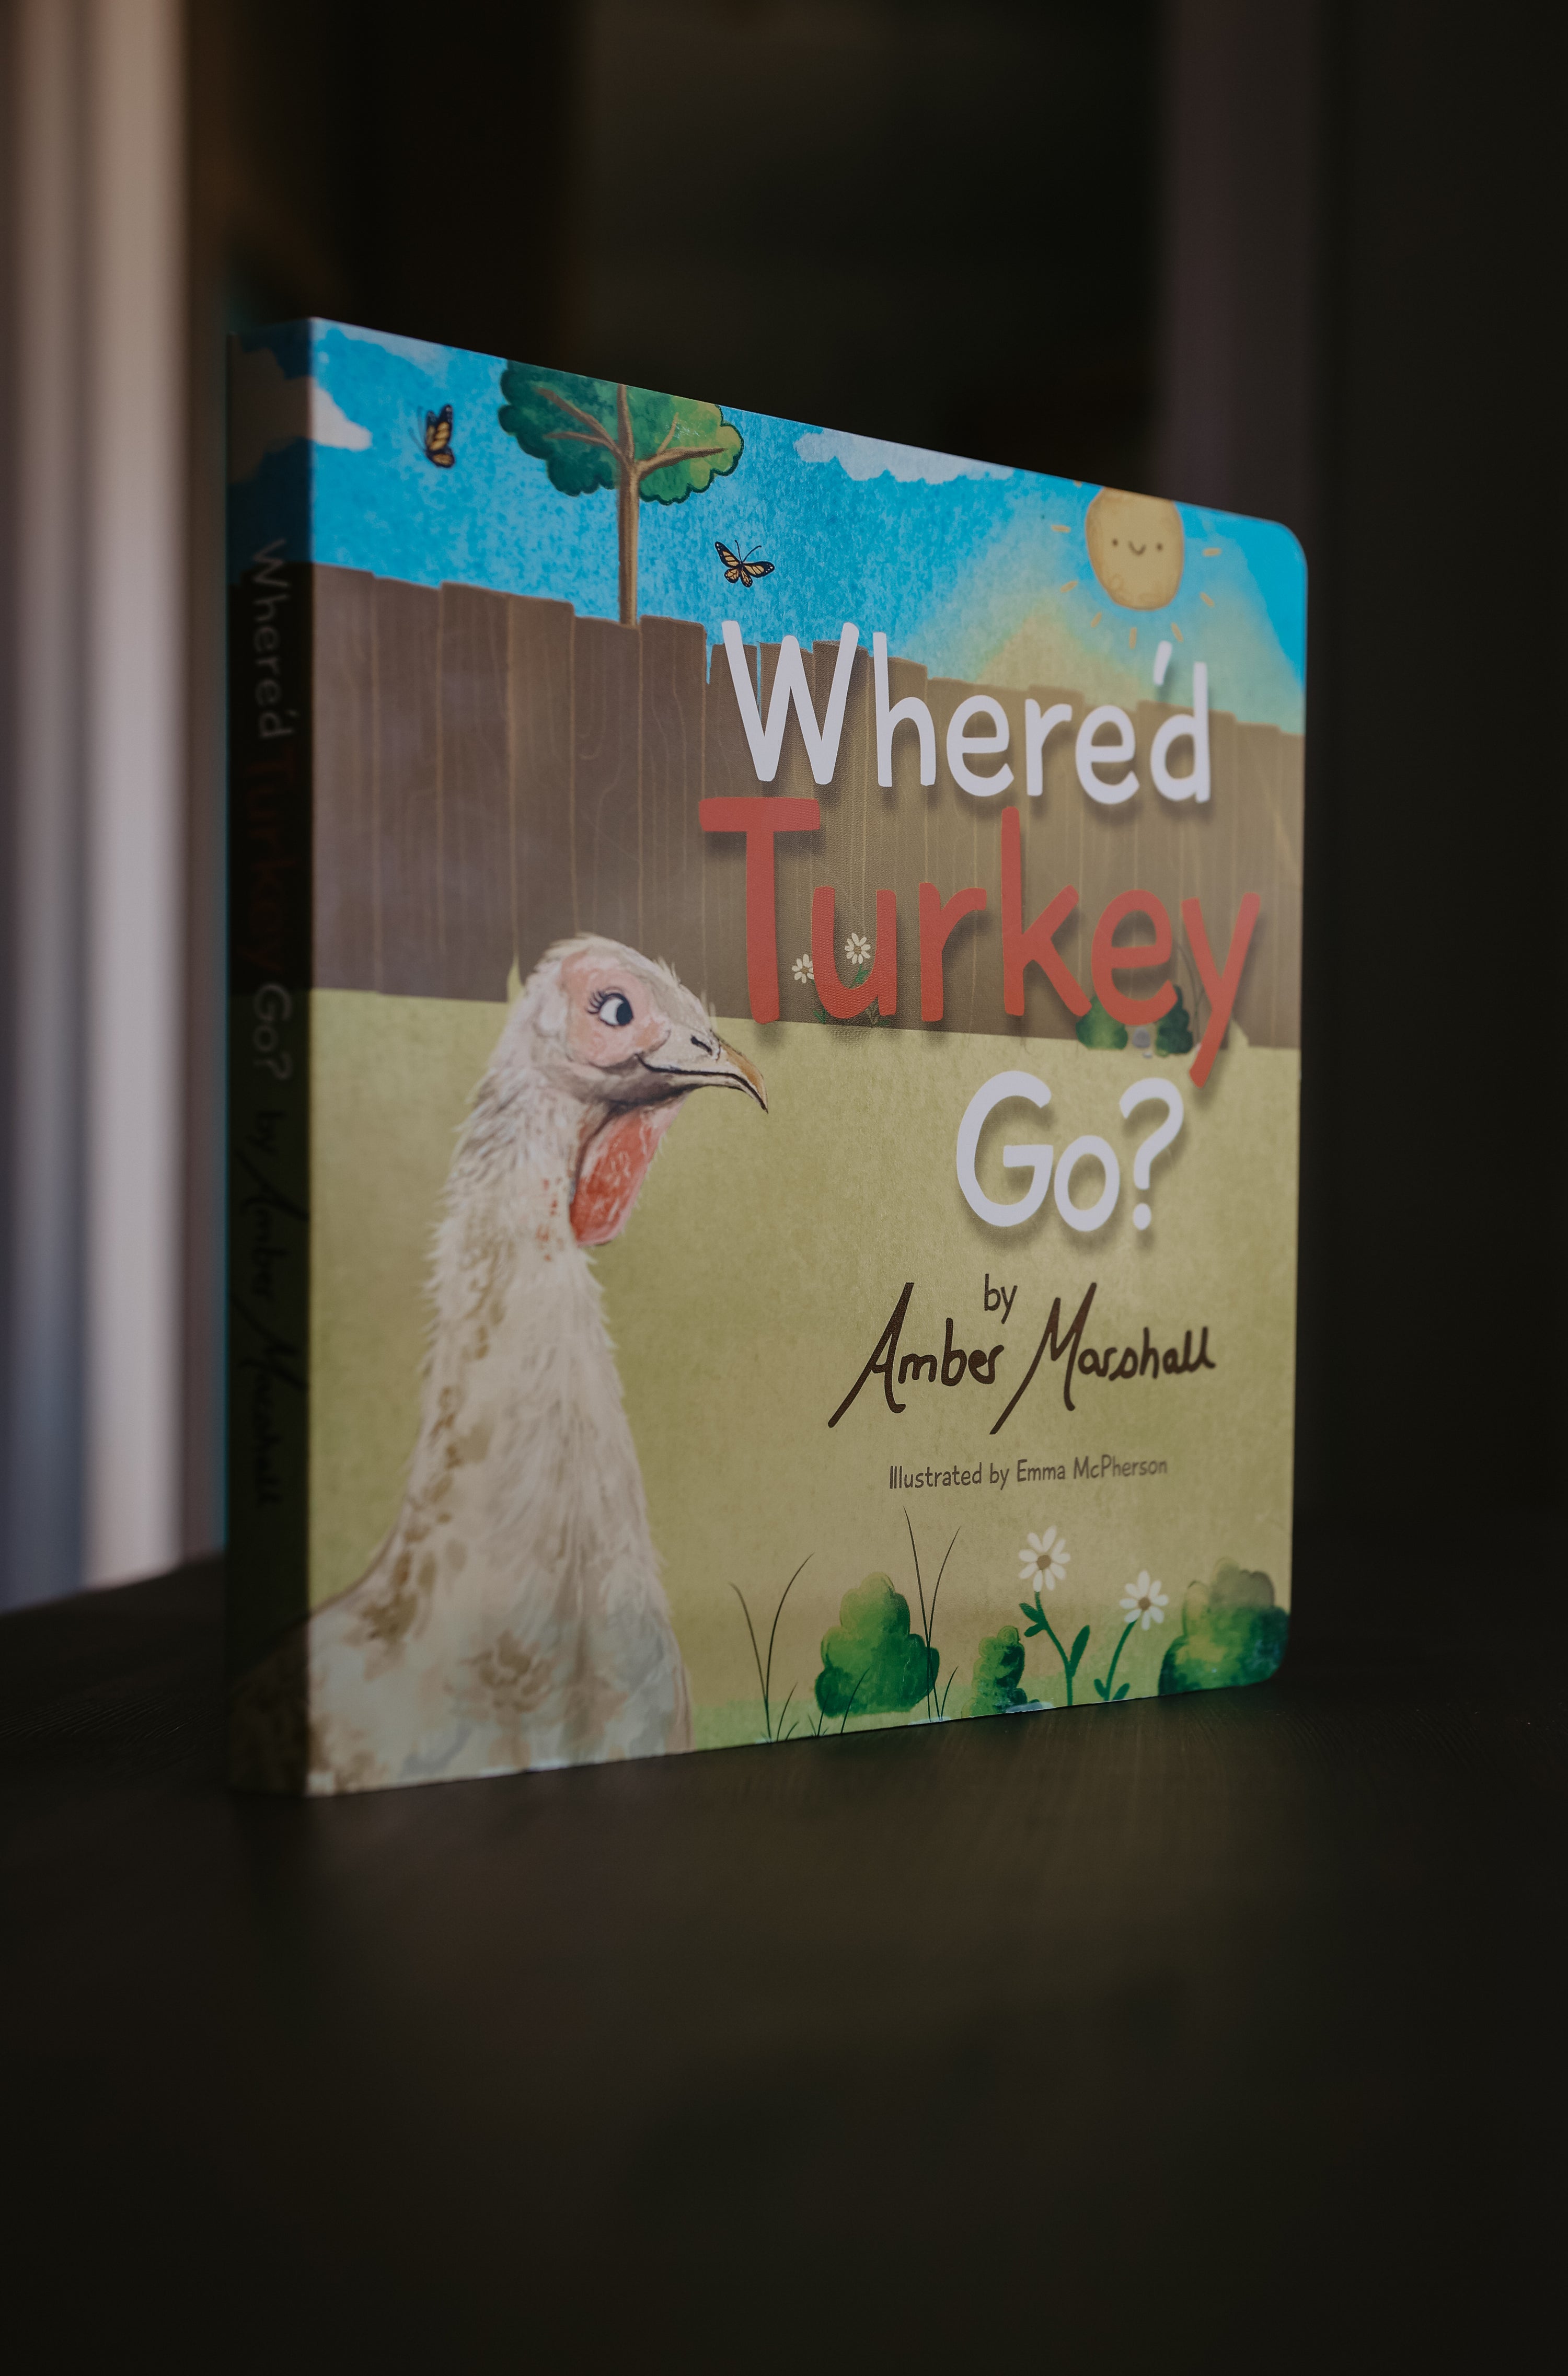 A MARSHALL Where'd Turkey Go? - AMBER'S SECOND BOOK!